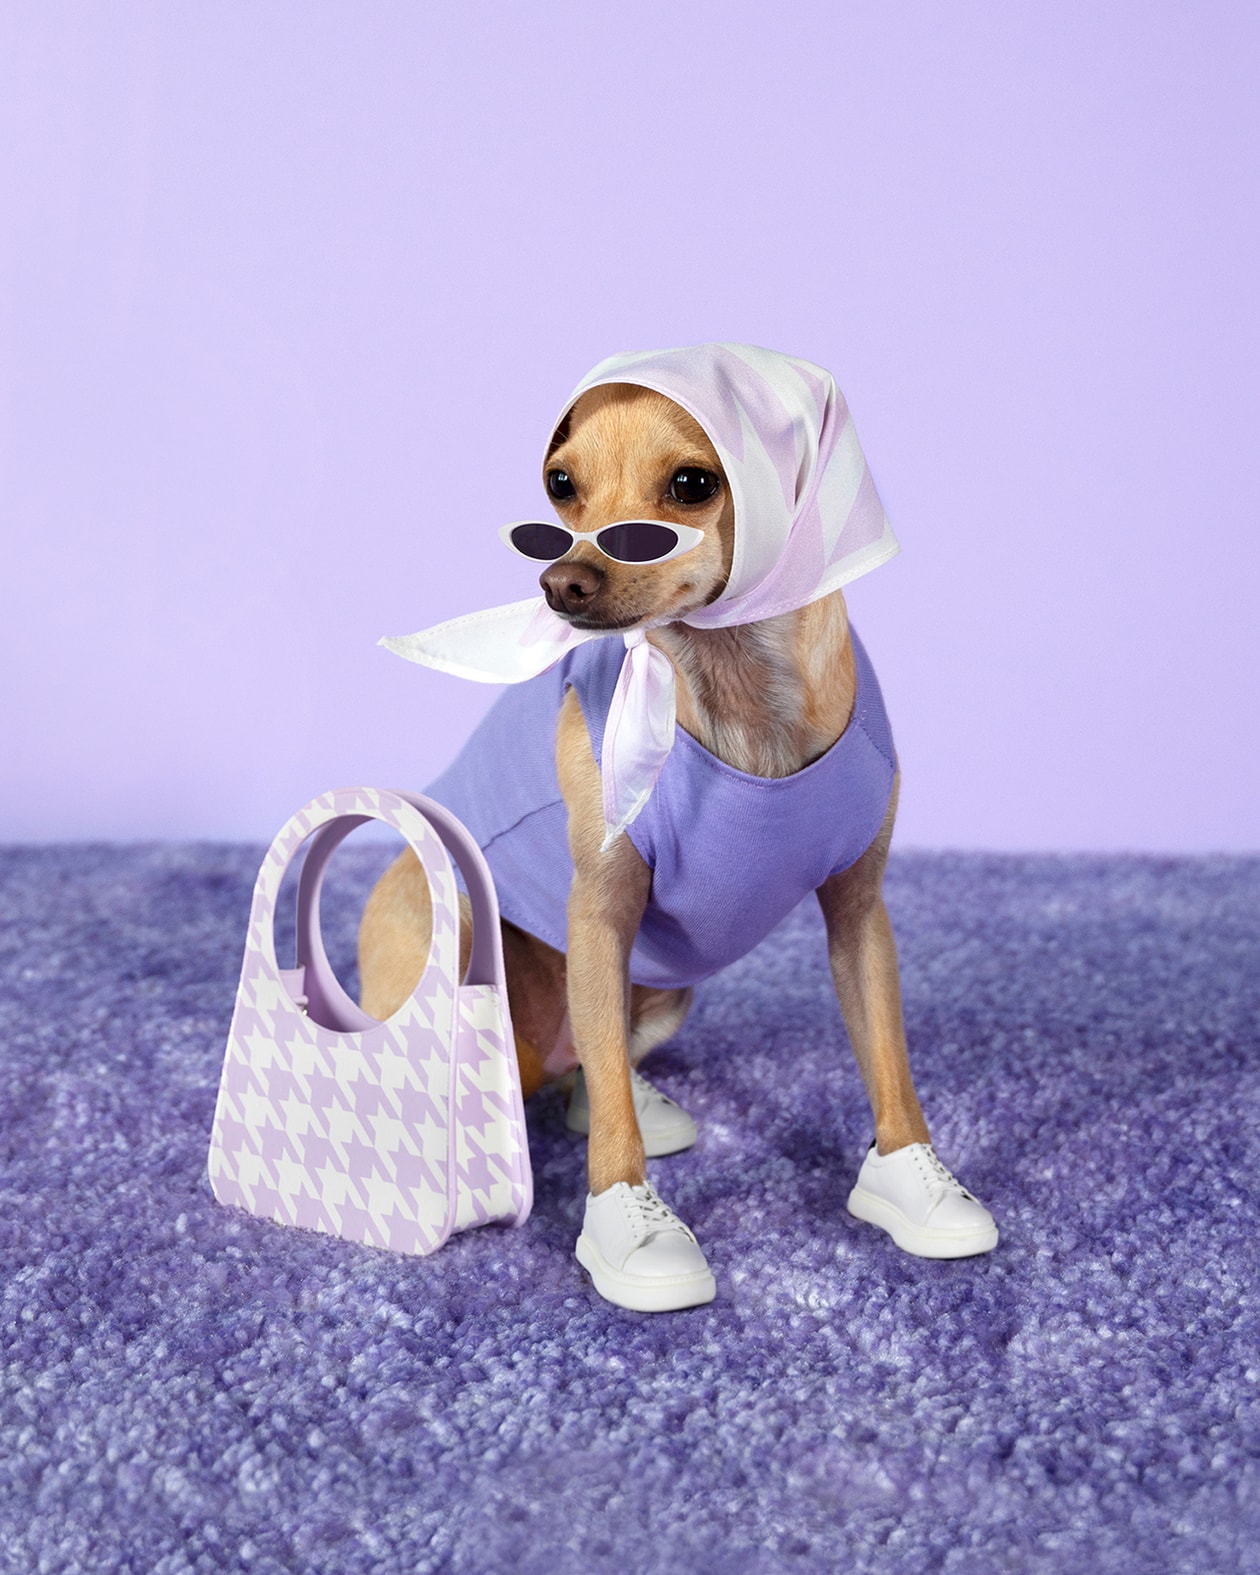 Boobie Billie Instagram Dog Fashion Influencer Style Chihuahua Sneakers Sunglasses Headscarf Cow Print Bag